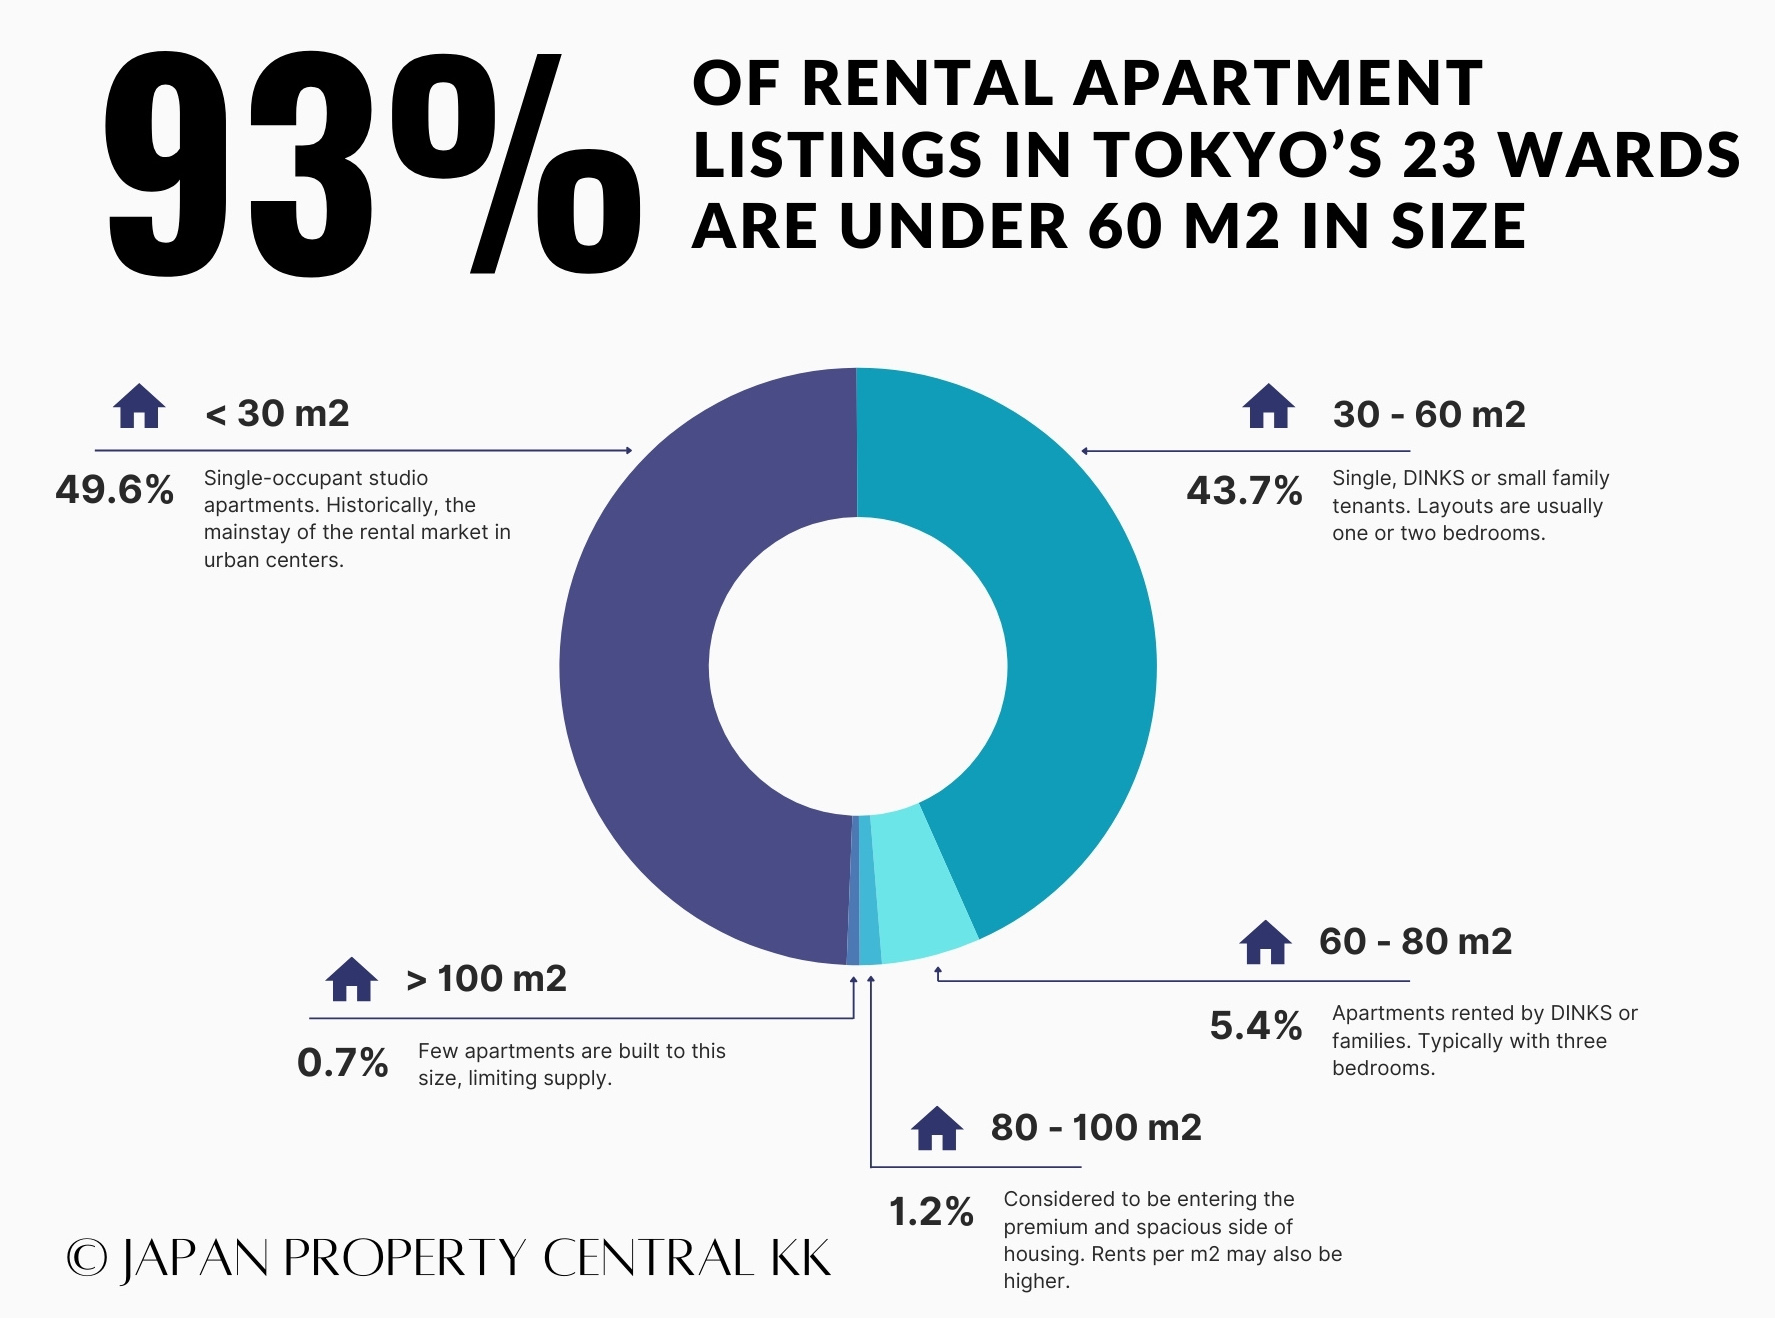 Slim pickings for large apartments in Tokyo – JAPAN PROPERTY CENTRAL K.K.